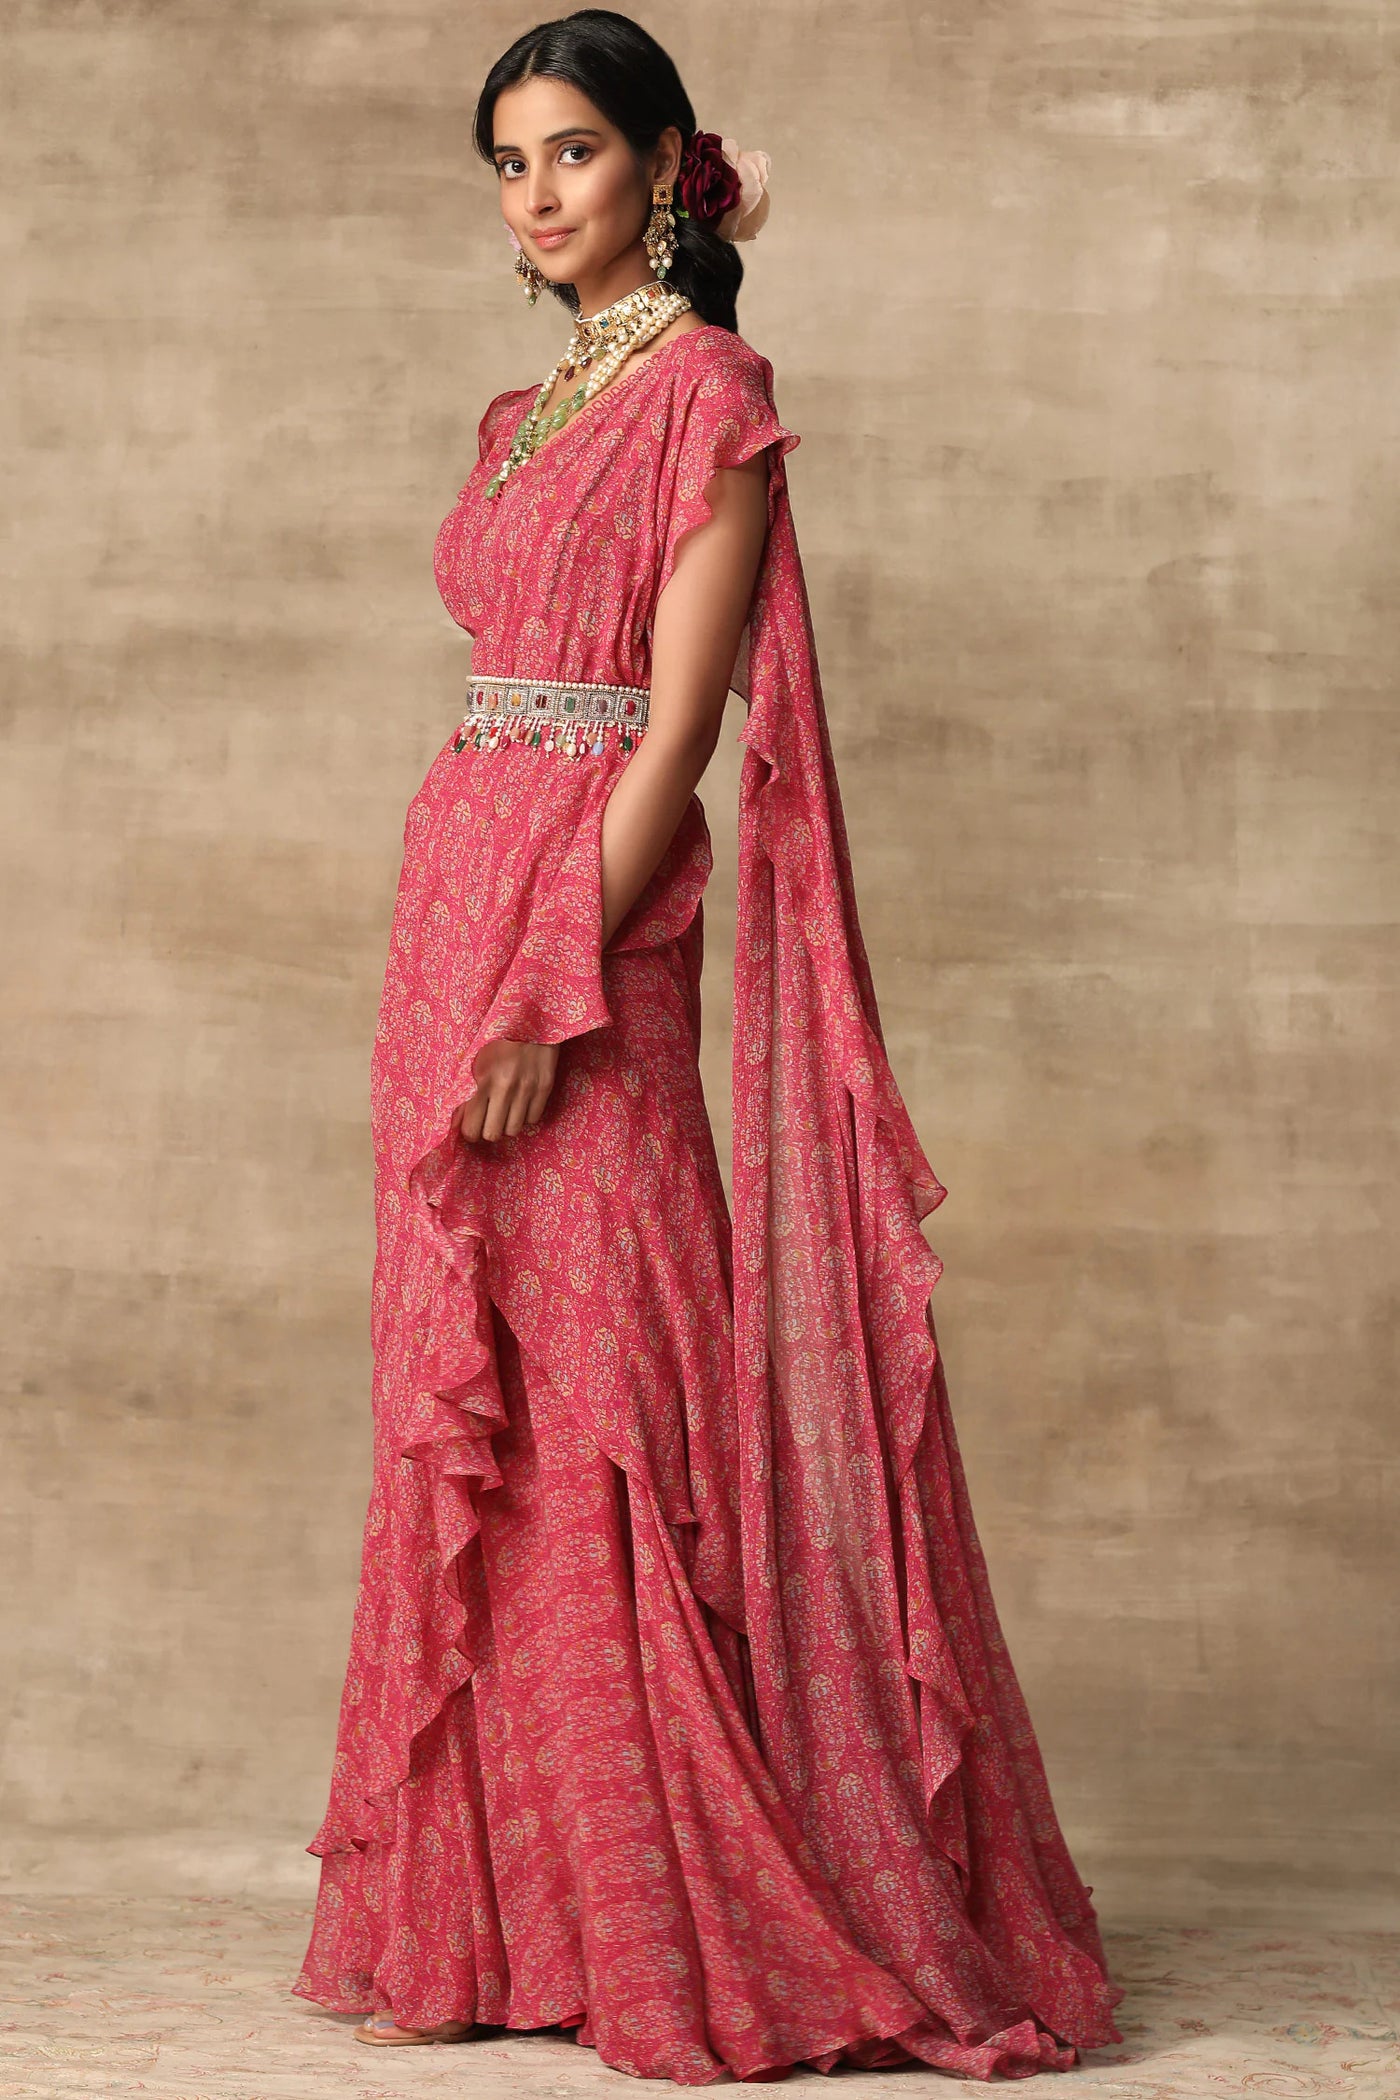 Designer Saree Indowestern Dress For Women Indian Saree Bollywood Saree  Stitched | eBay